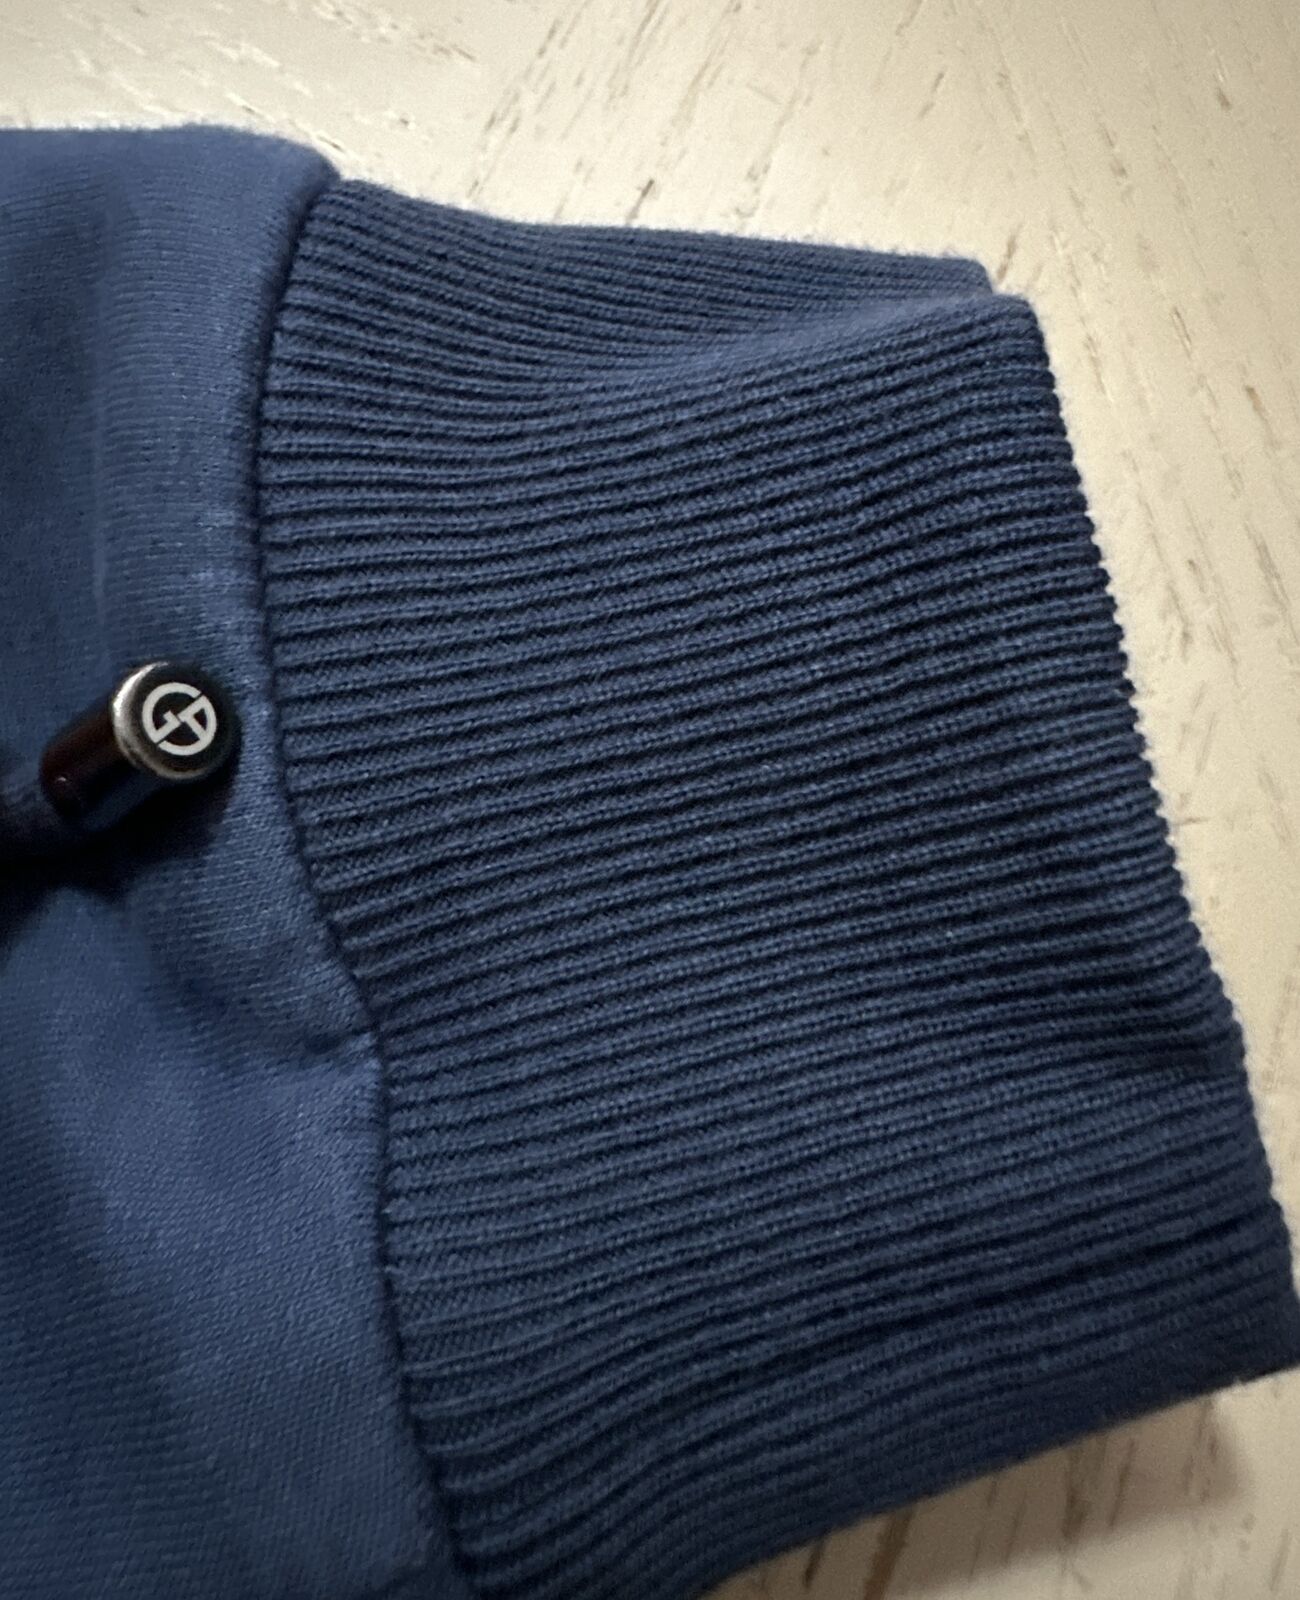 Giorgio Armani Men hoodie Pullover Blue L ( 52 Eu ) Italy NWT $1995